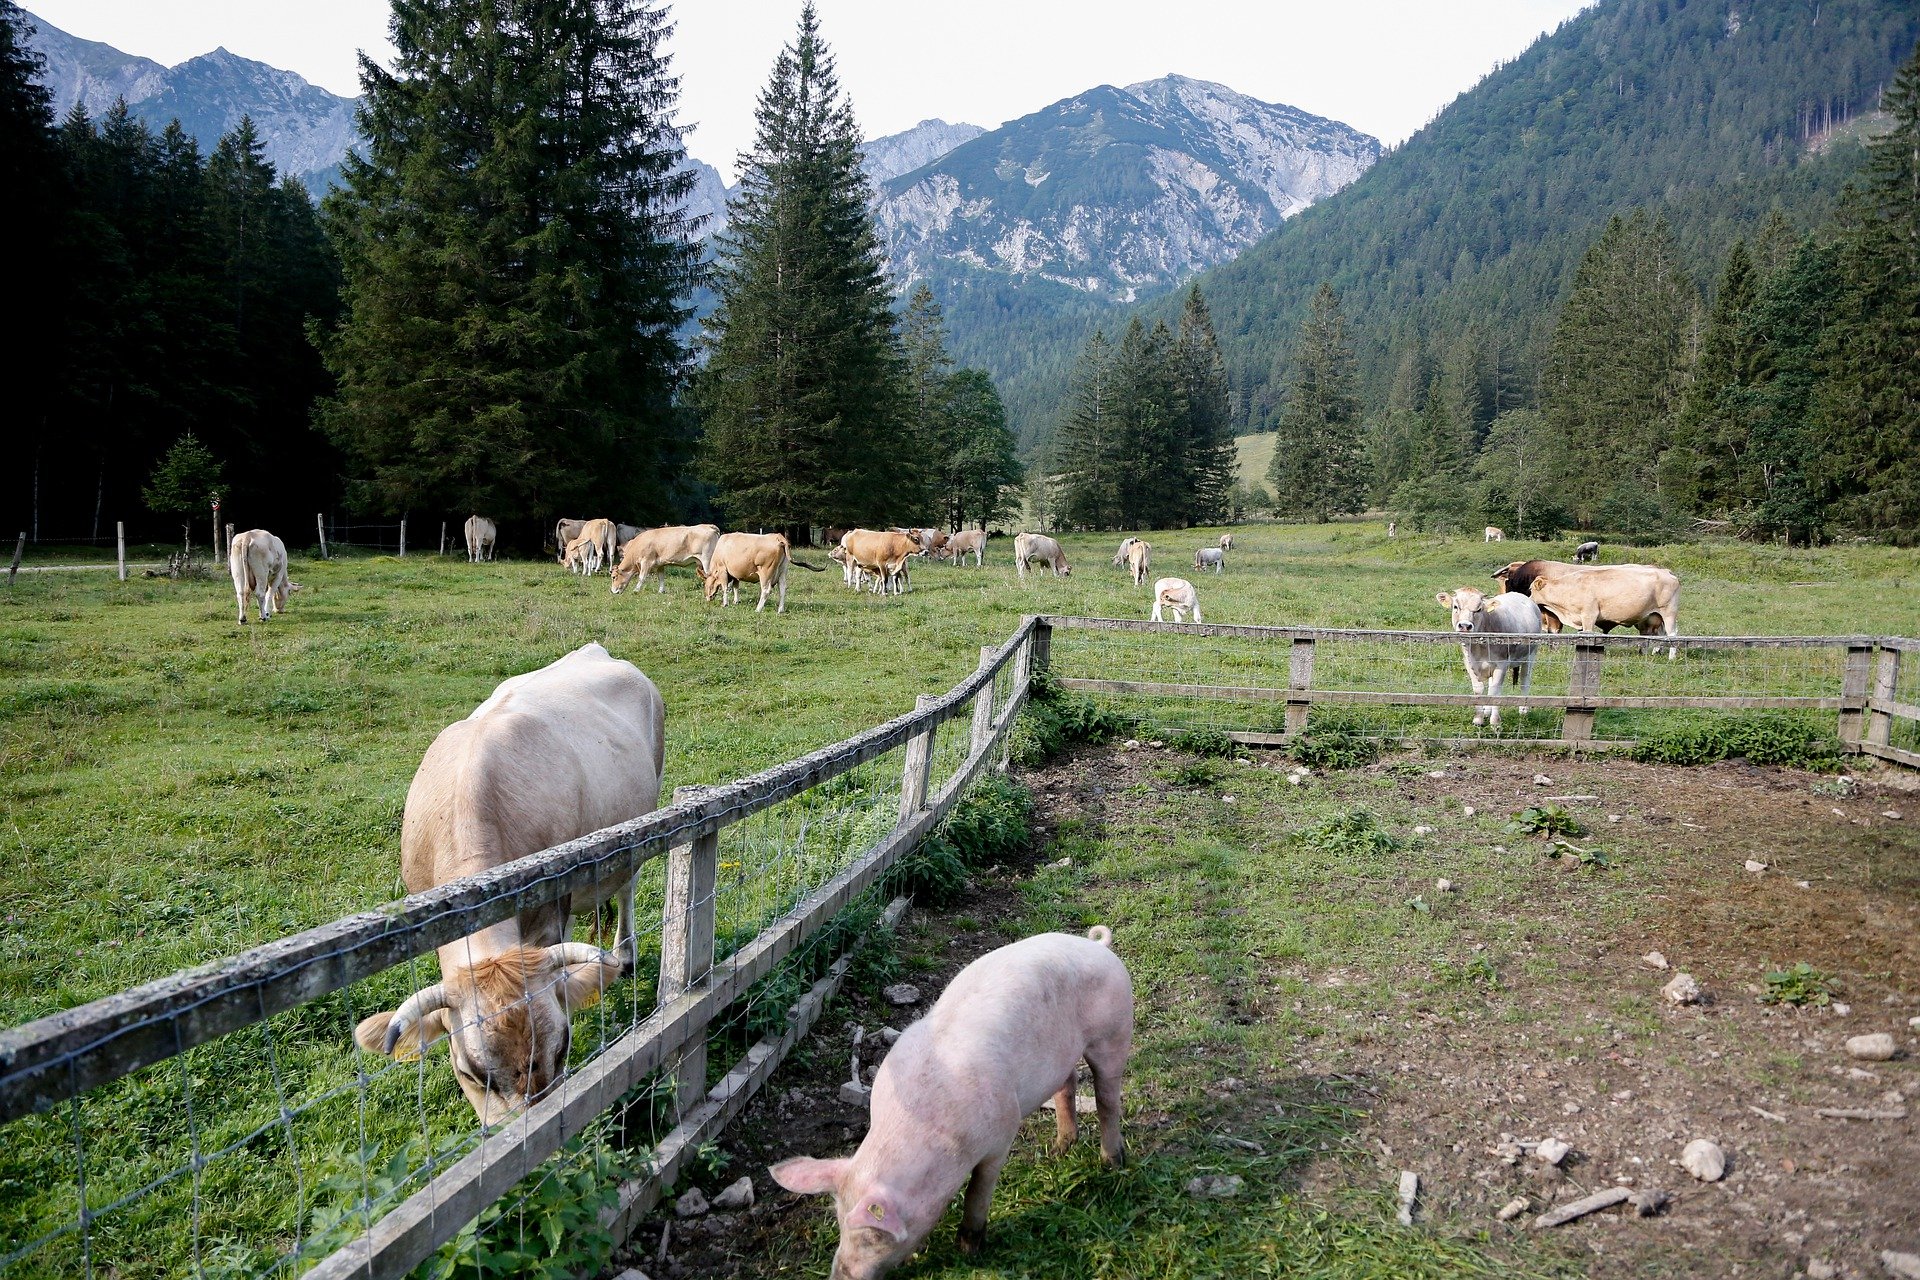 The barn was home to a pig and a cow. | Photo: Pixabay/Kurt Bouda 